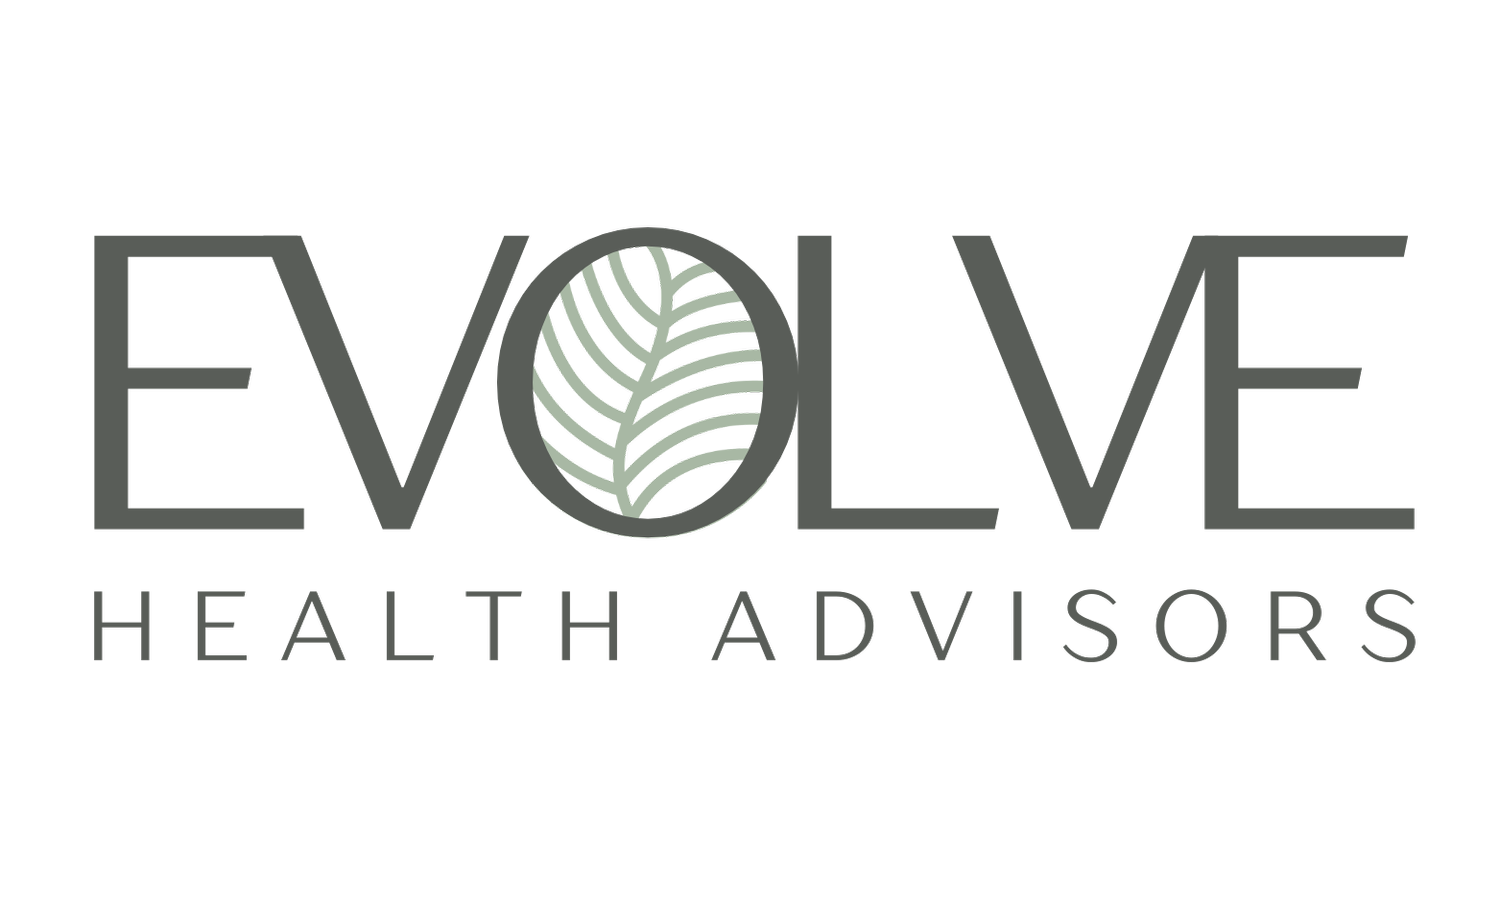 Evolve Health Advisors LLC